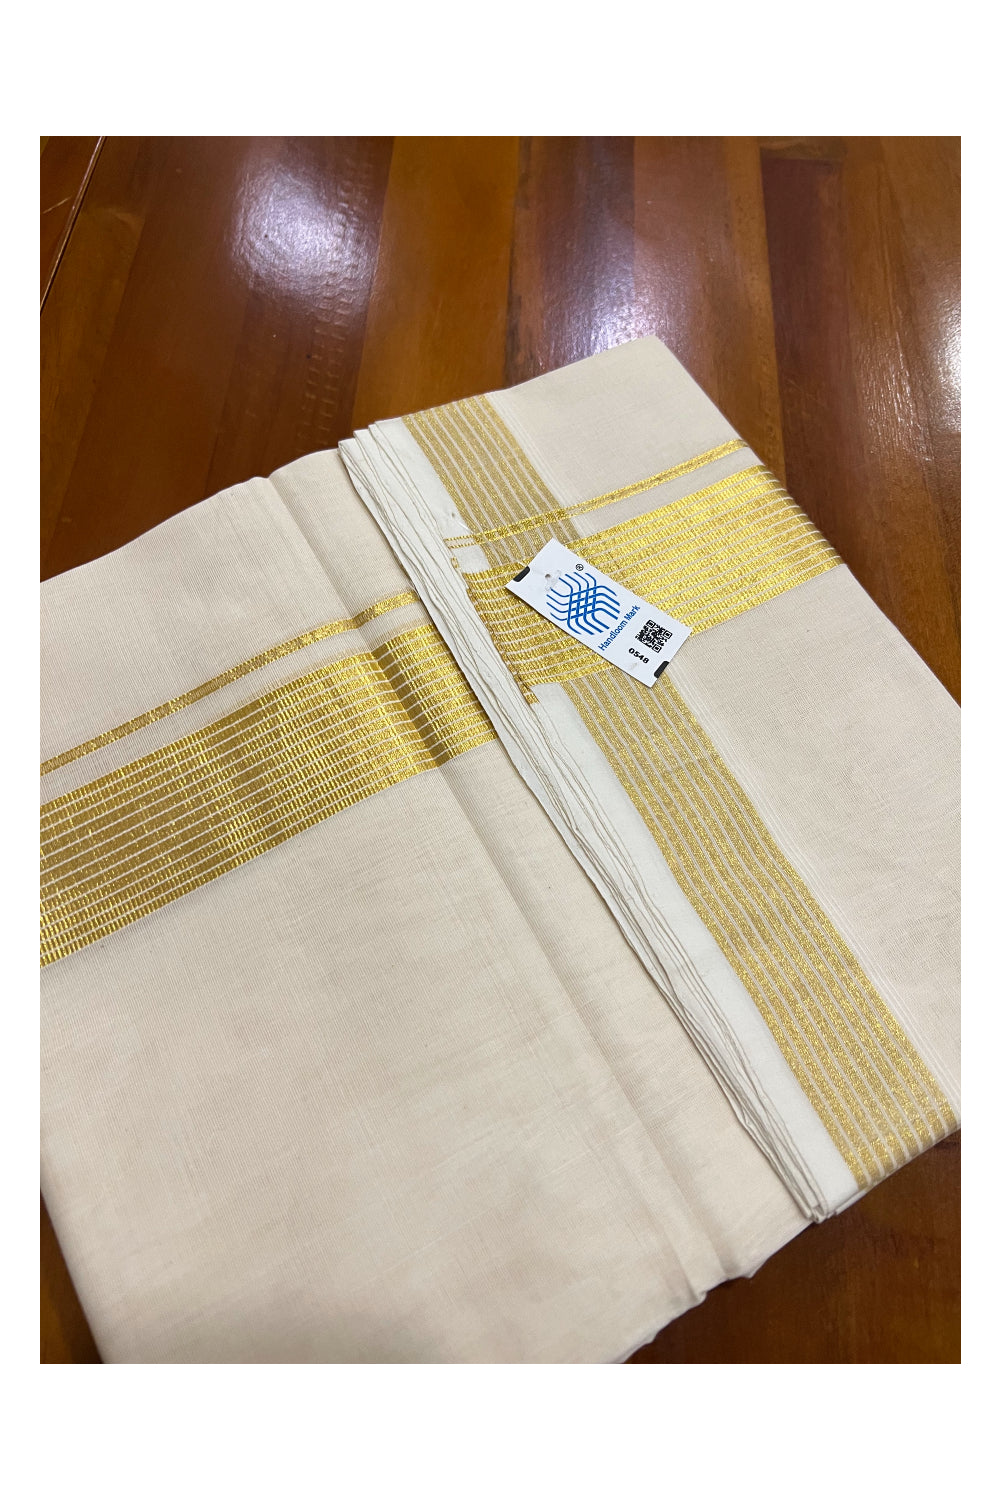 Southloom Super Premium Unakkupaavu Handloom Double Mundu with White Lines on 2 inch Kasavu Border (South Indian Kerala Dhoti)